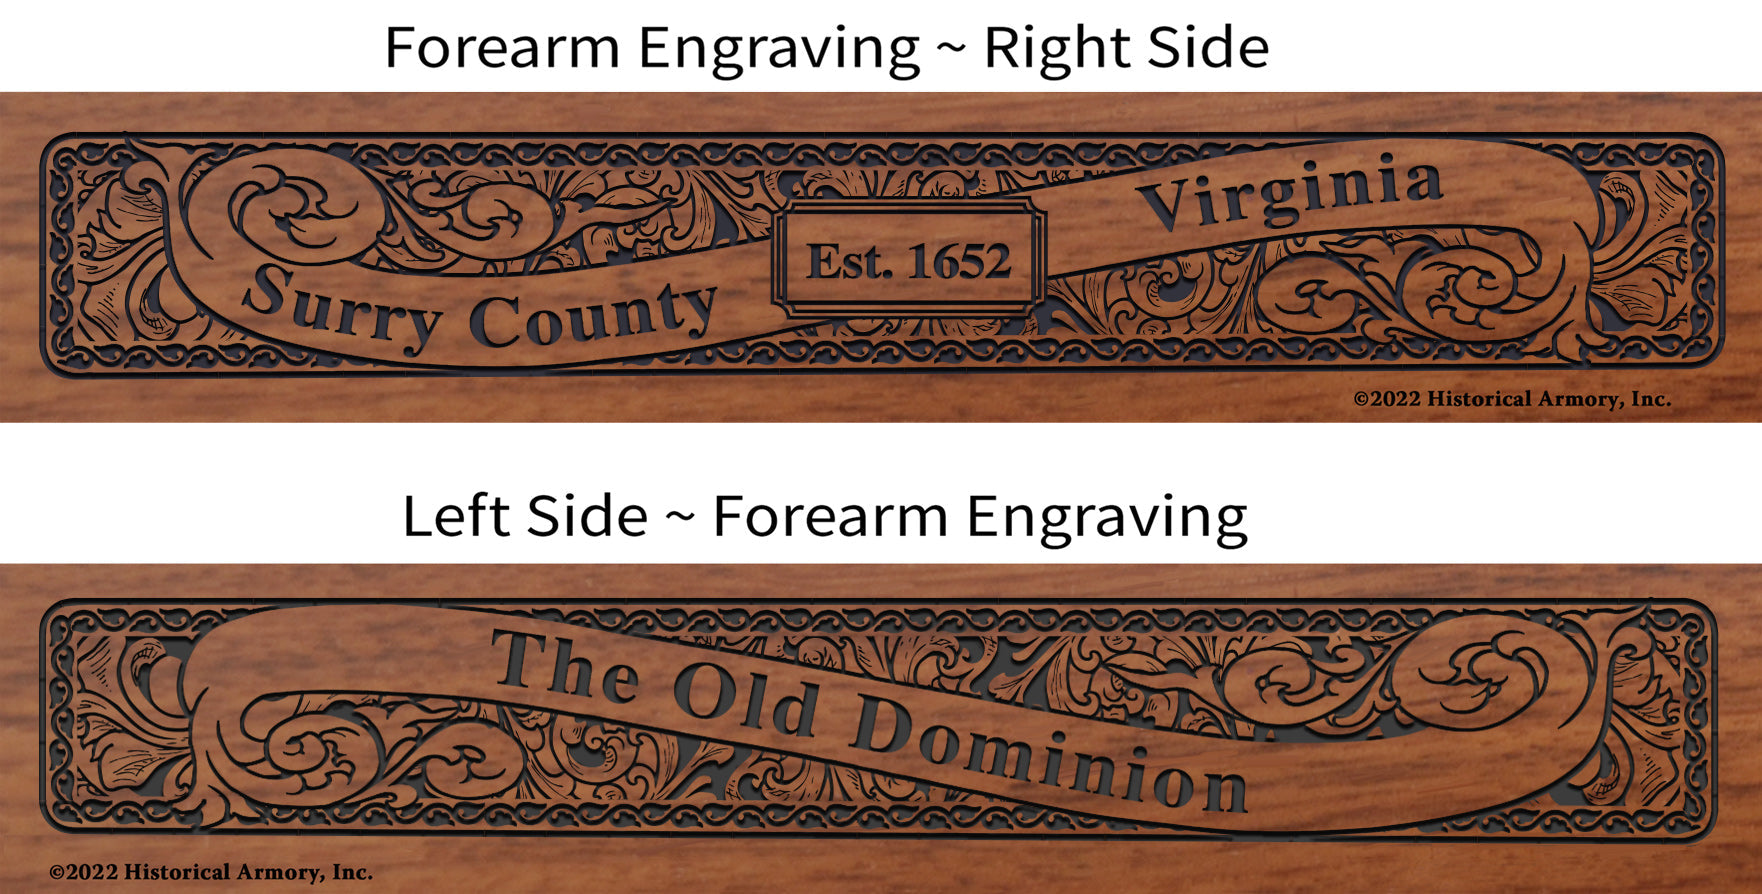 Surry County Virginia Engraved Rifle Forearm